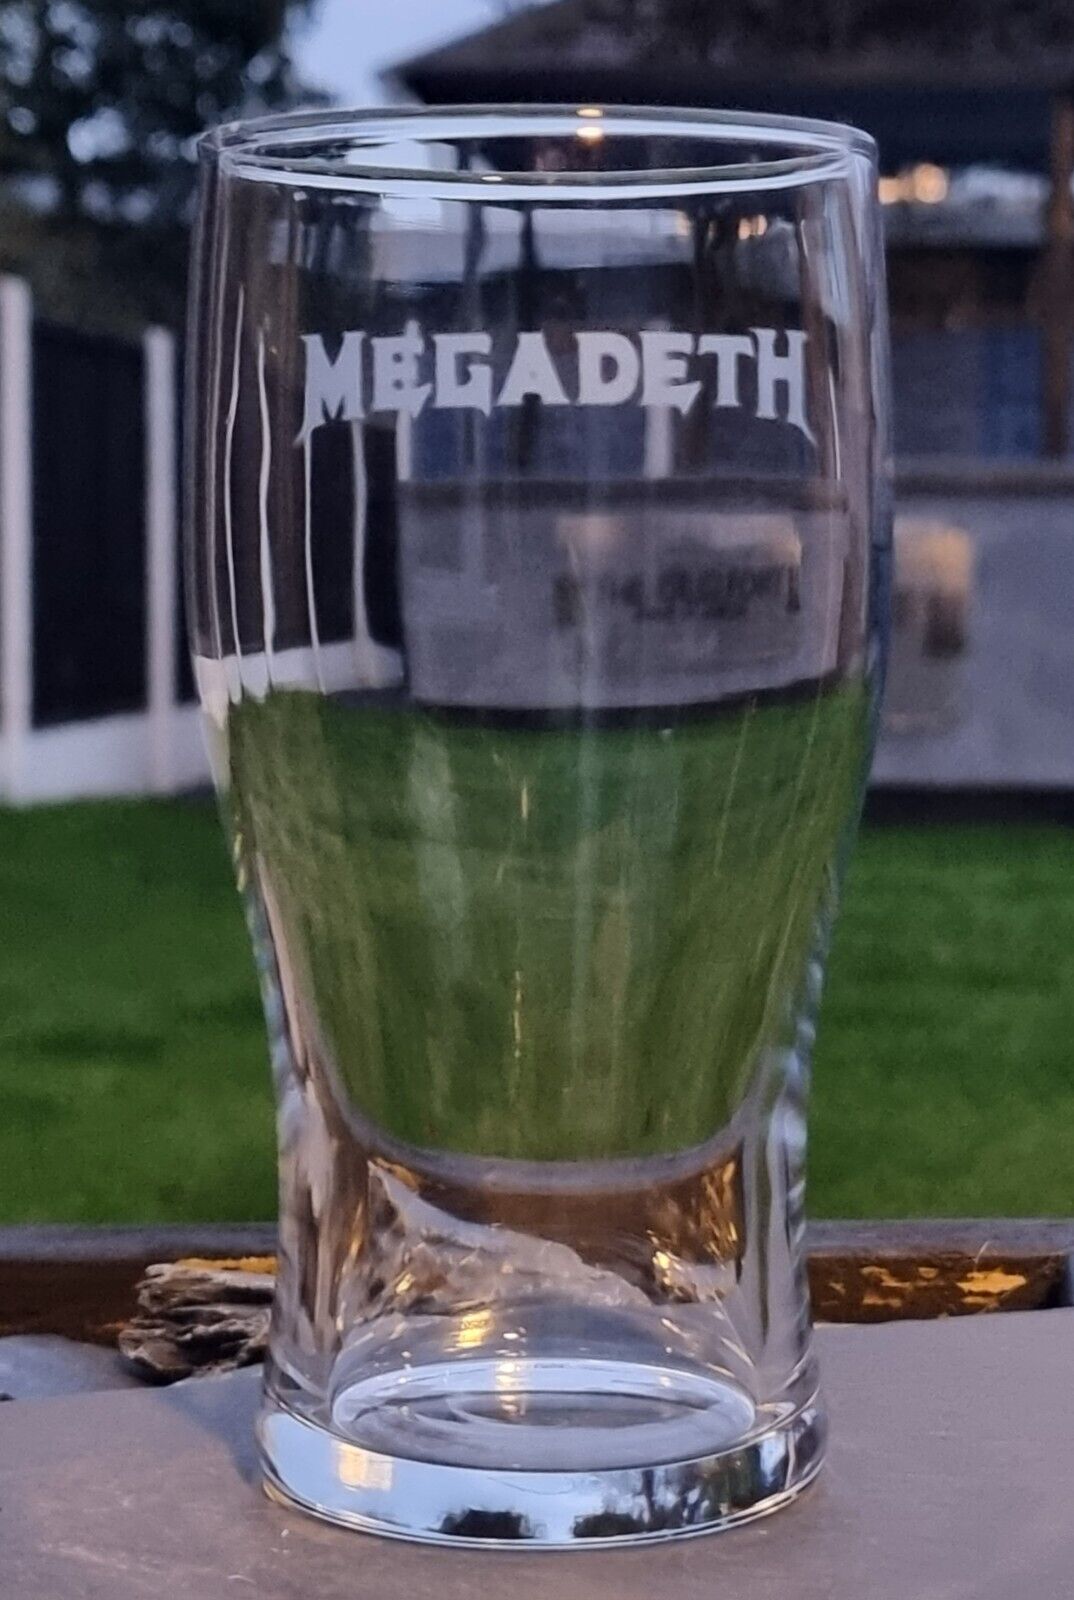 Megadeath Pint Glass